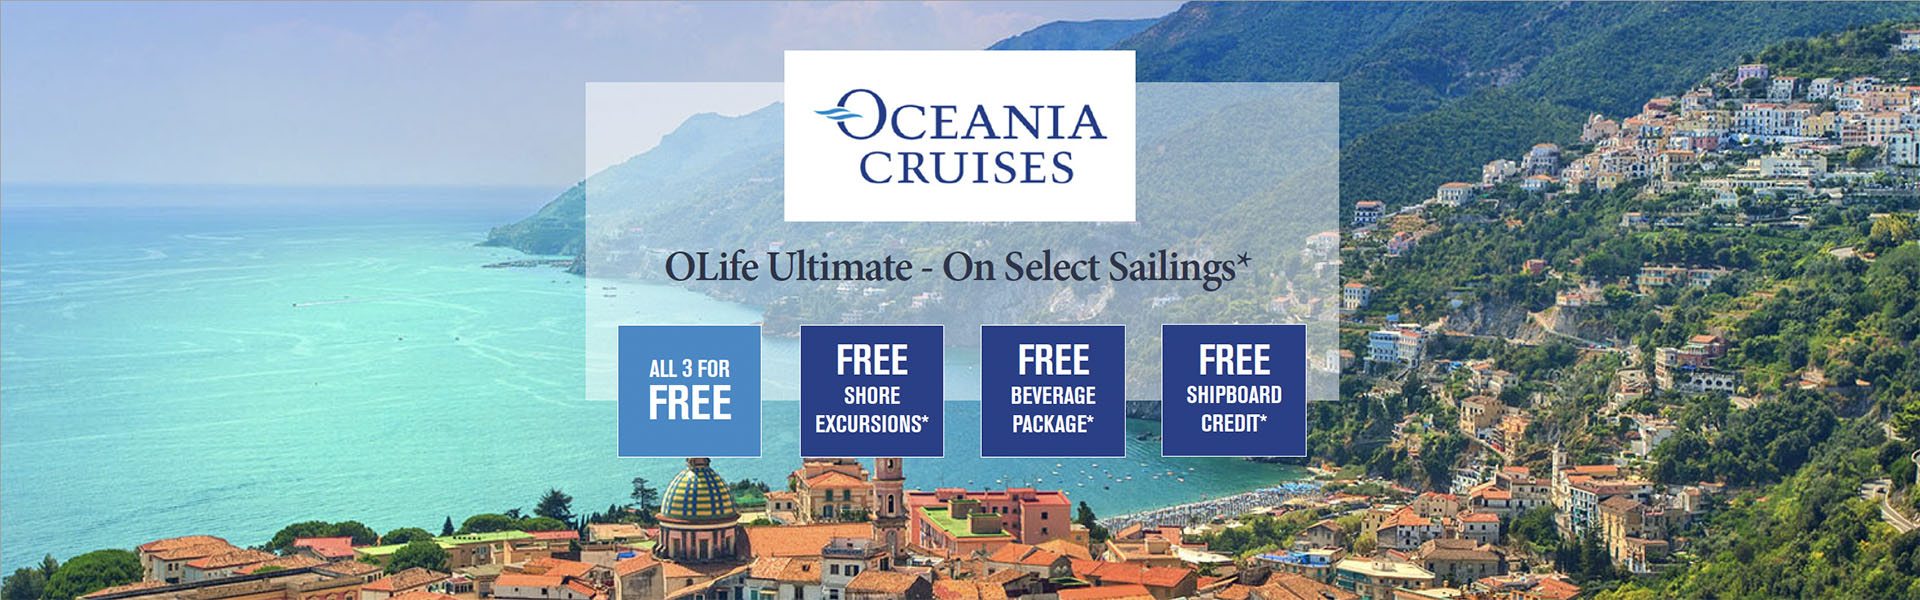 Oceania Cruises OLife Ultimate